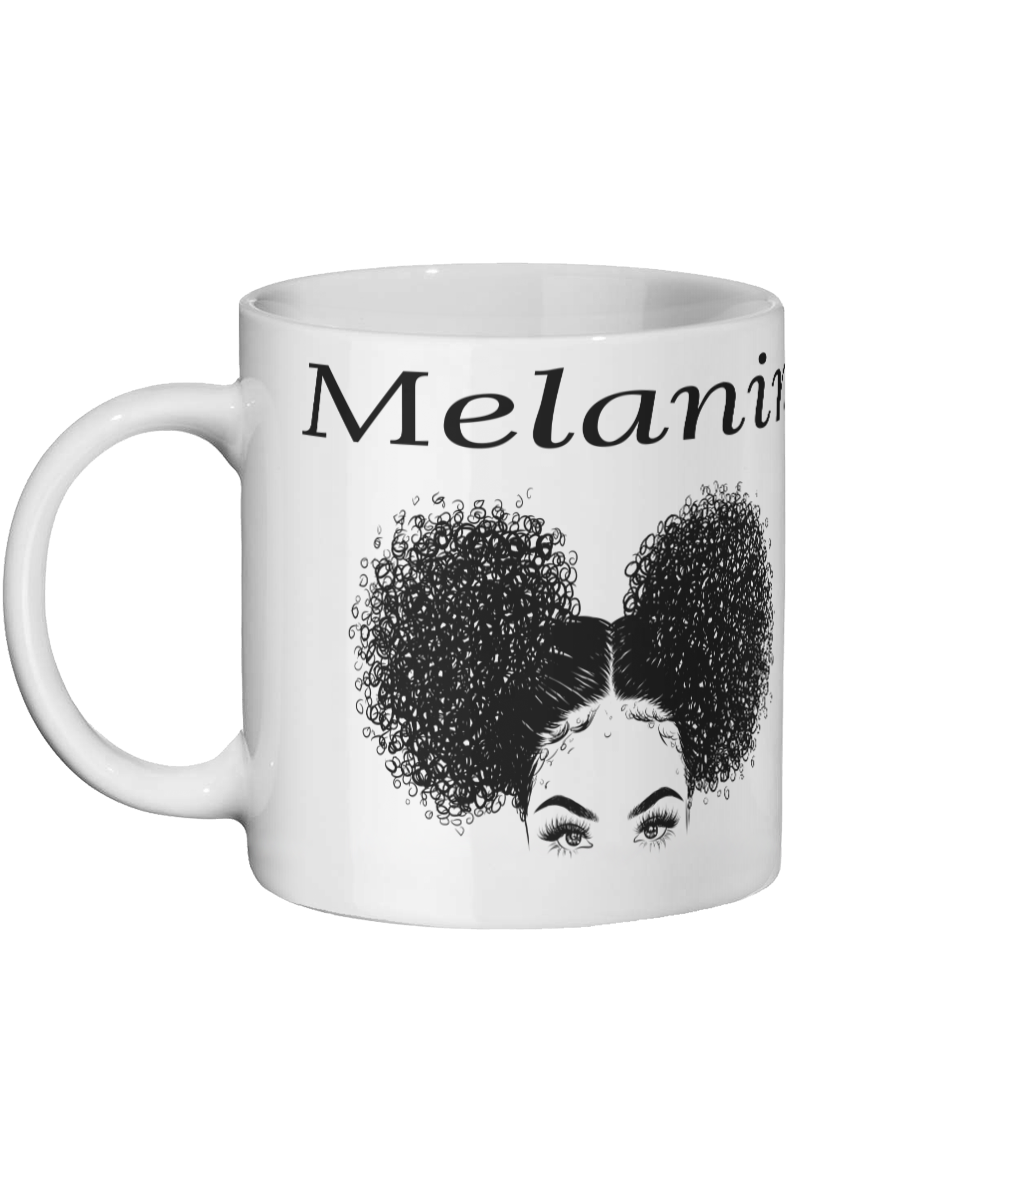 Melanin Poppin - Ceramic Mug - FAST UK DELIVERY